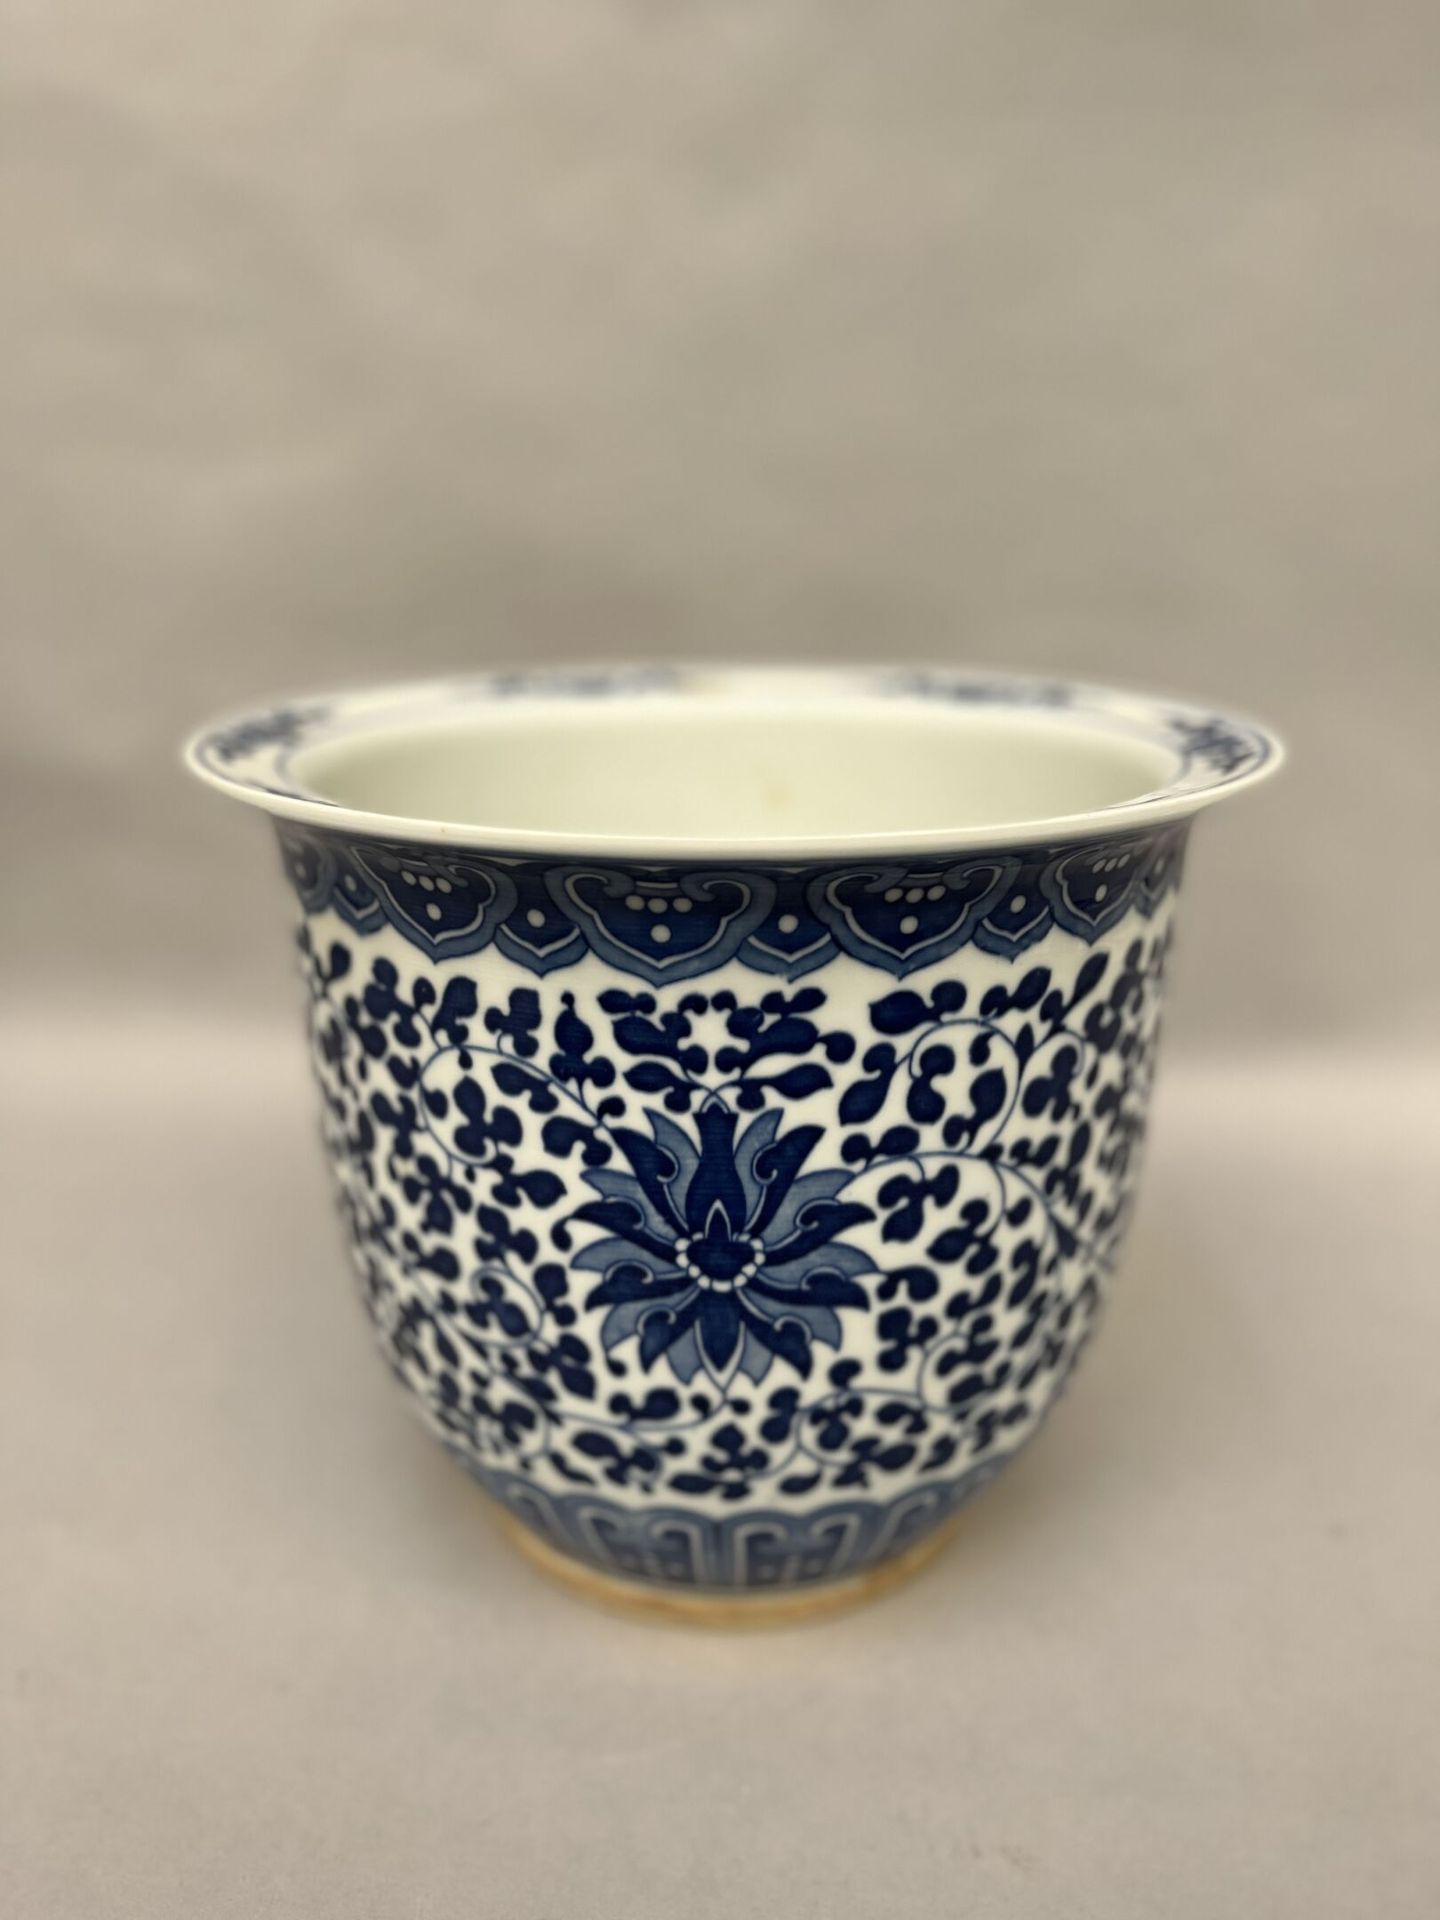 Null 中国

瓷器罐，有蓝白相间的浮雕和叶子的装饰。

(底部有穿孔)

高23厘米。

直径27.5厘米。